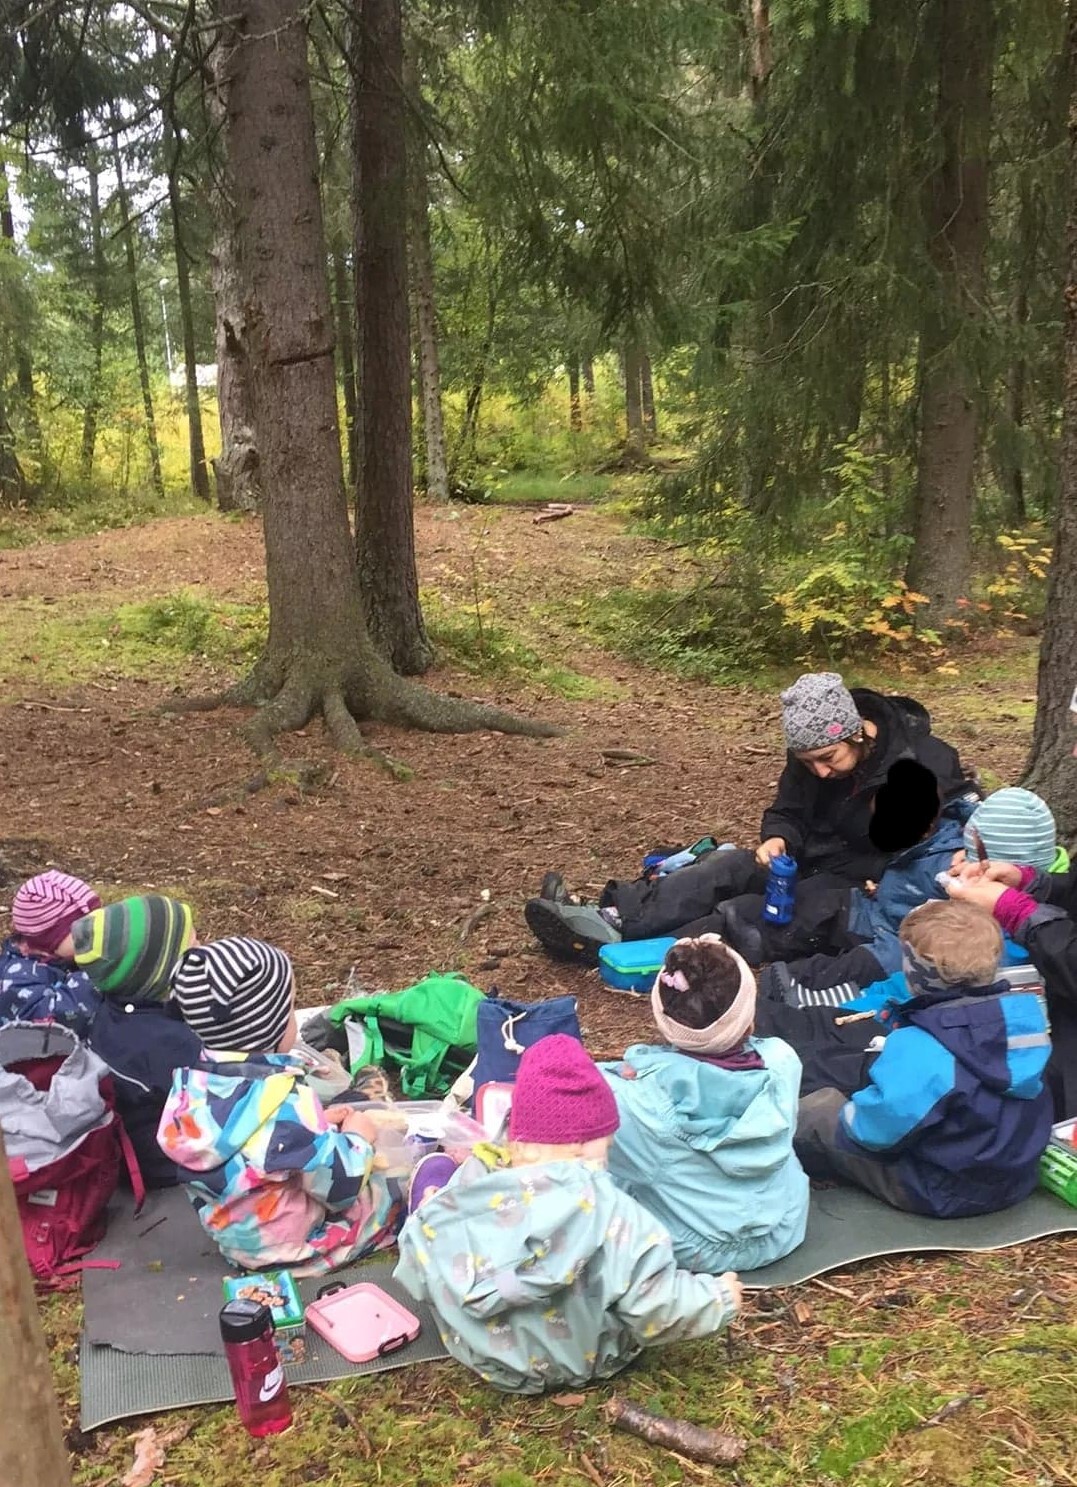 Barn og en voksen sitter sammen i en halvsirkel i skogen, og spiser lunsj.